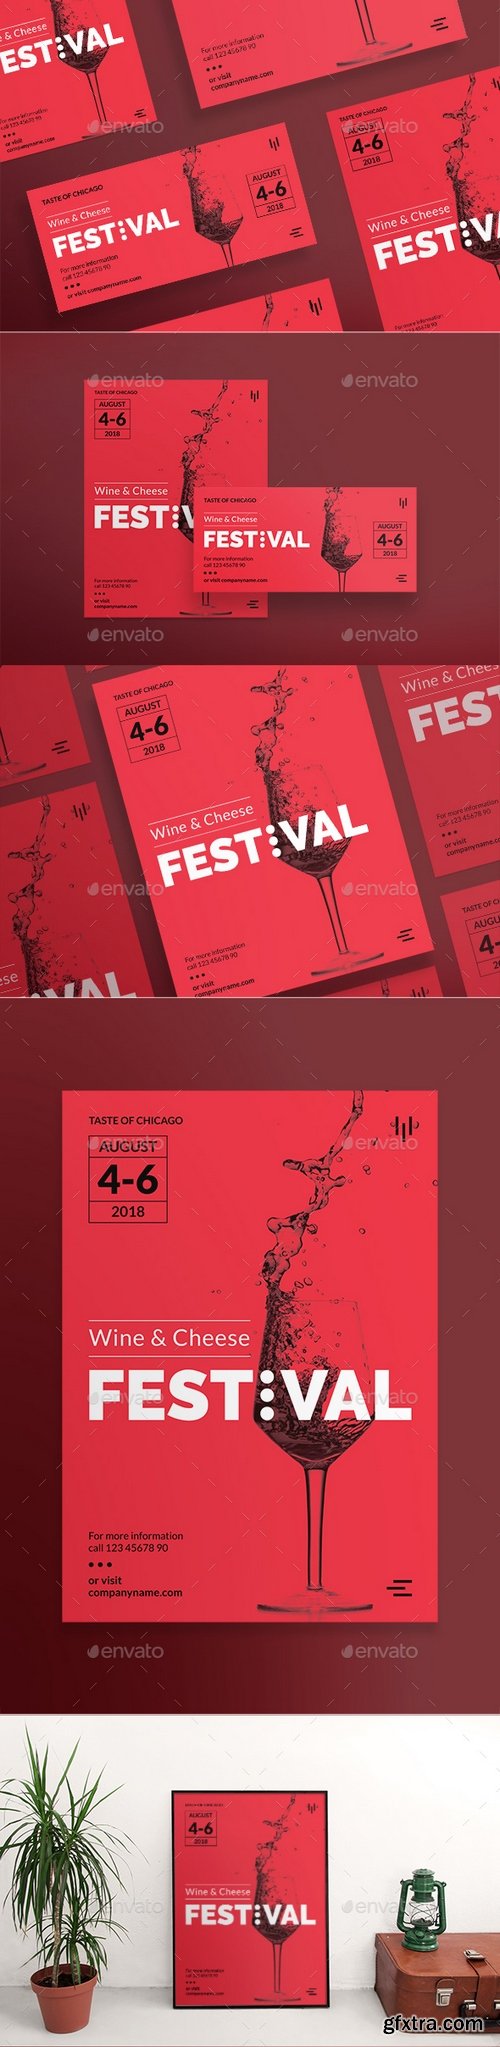 Graphicriver - Wine Festival Flyers 20903285